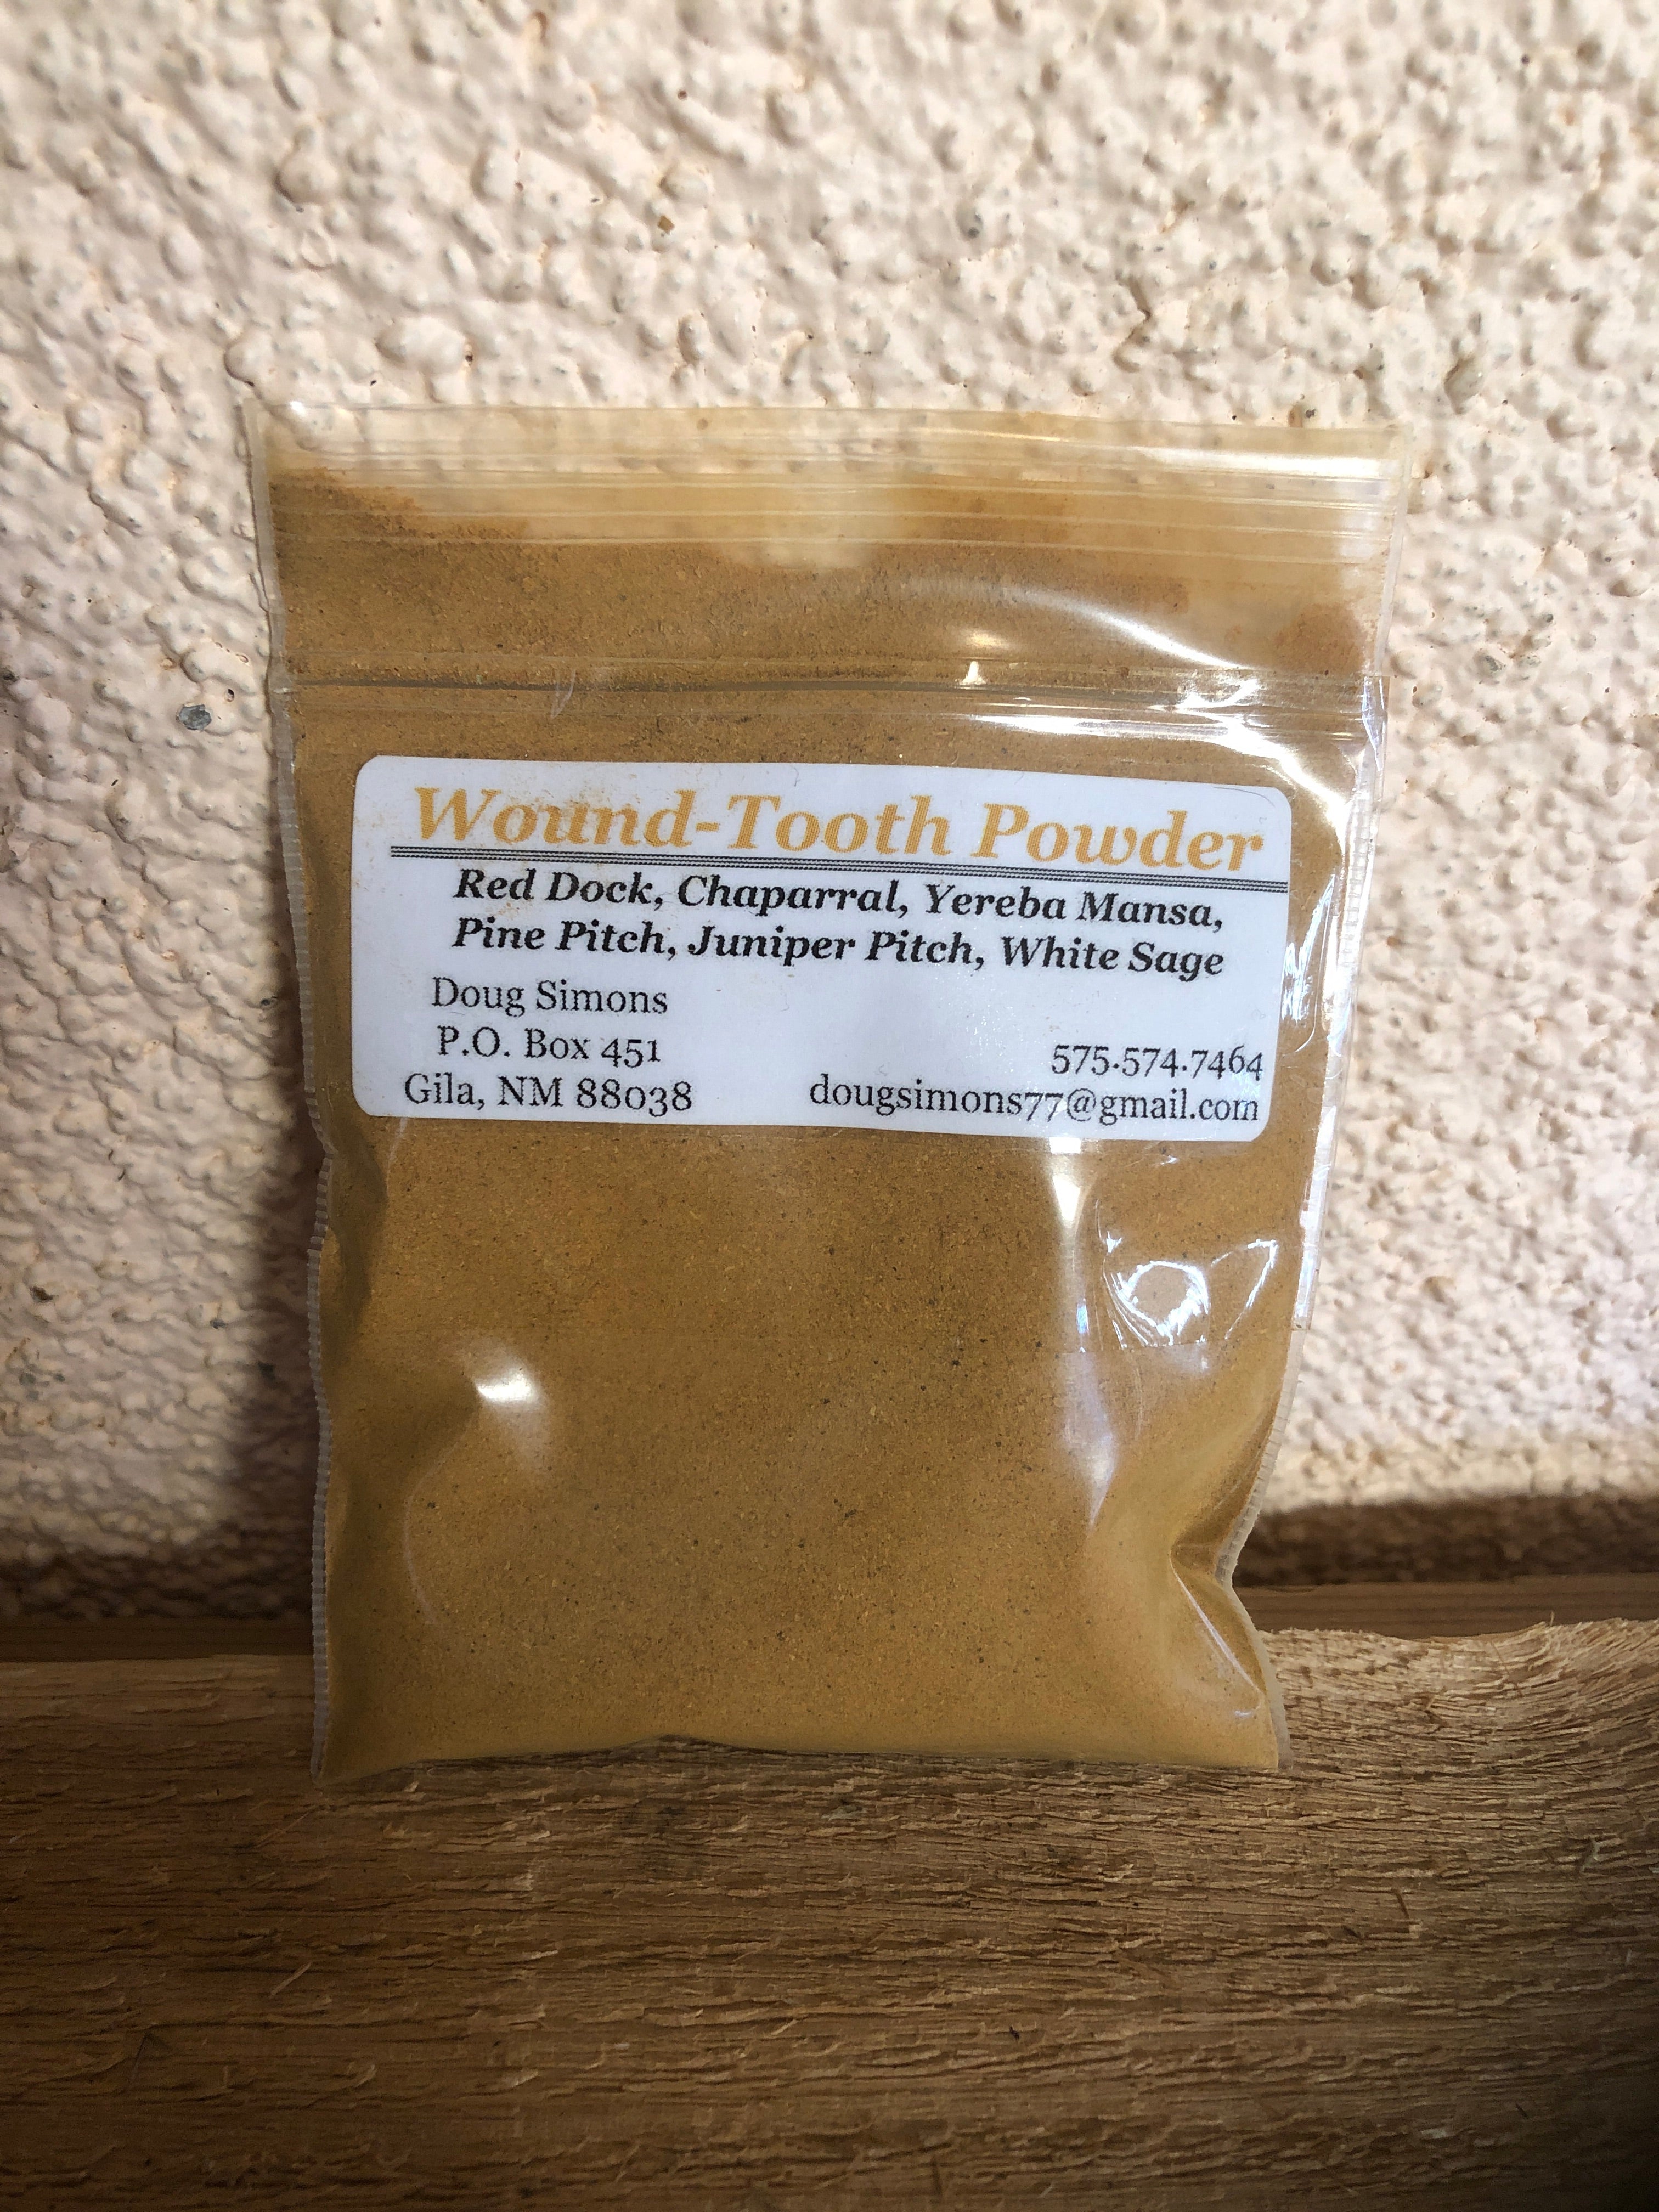 Chanchka Wound / Tooth Powder